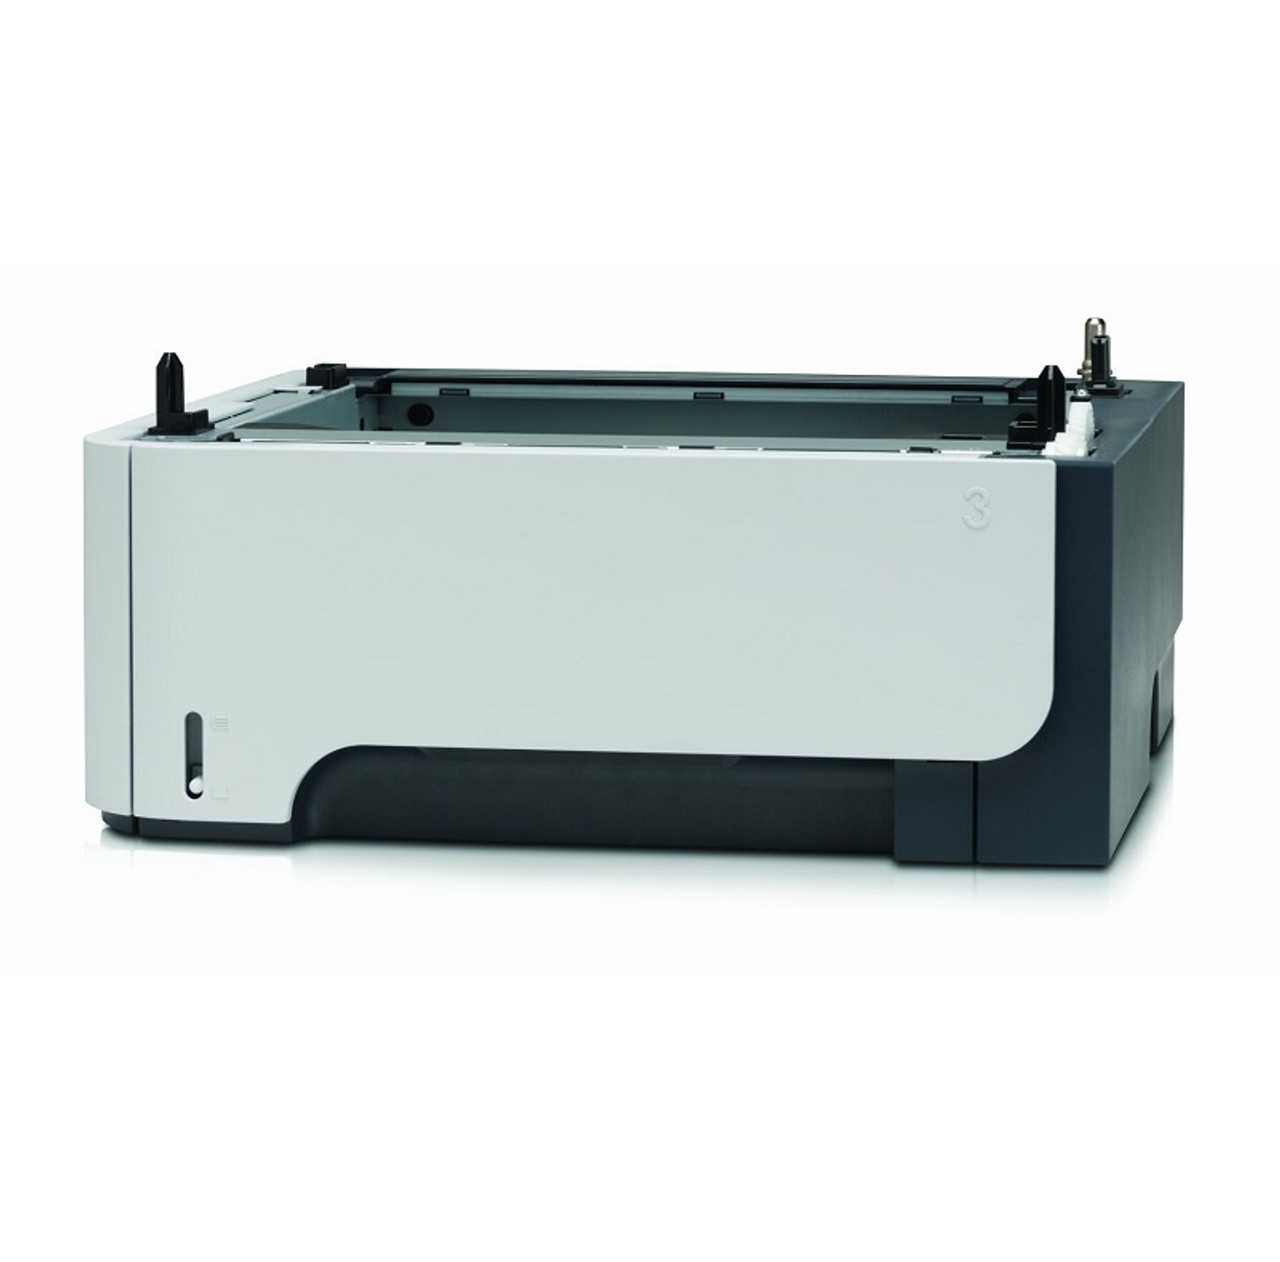 C5931-69001 - HP 250-Sheets Paper Feeder Tray Assembly for LaserJet 1320 / P2015 Printer (Refurbished / Grade-A)